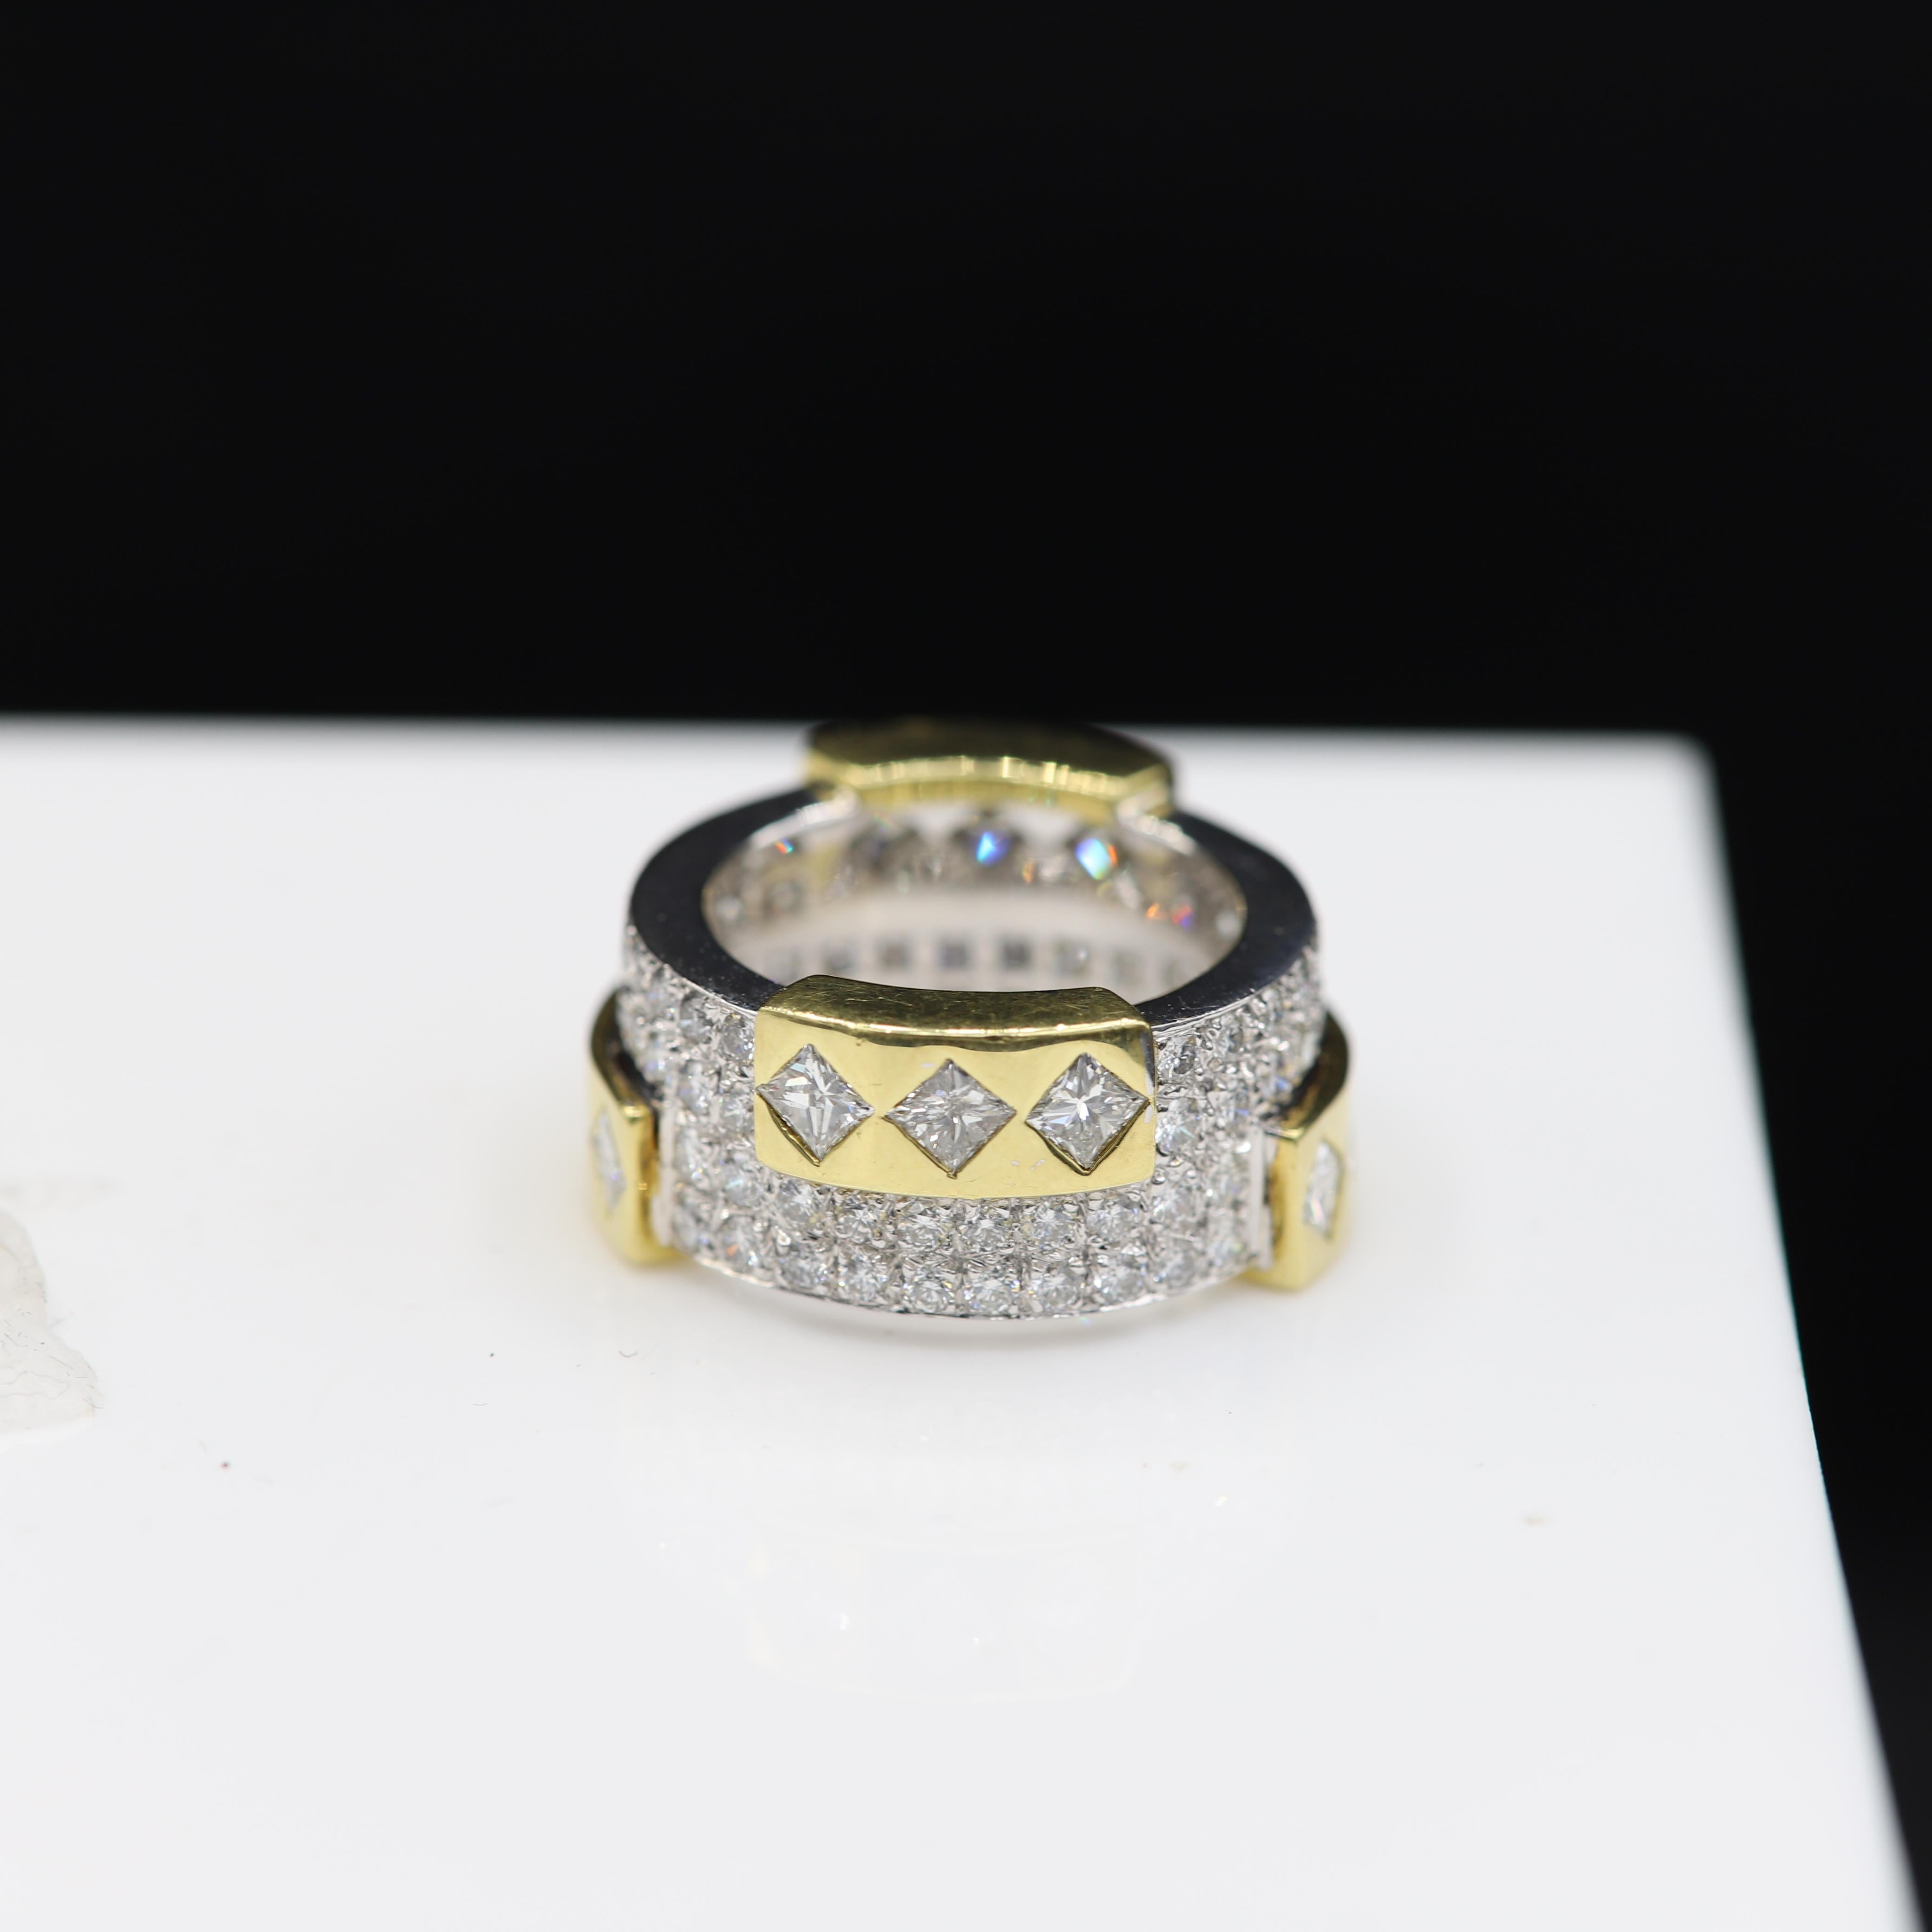 Bold Eternity Band Ring, 
Total Diamonds 4.06 carat G-VS, 
18k White & Yellow Gold 15.60 Grams 
Princess cut Diamond 2.15 carat G-VS
Round Diamonds 1.91 cart G-VS
Finger size 7 - CANNOT RESIZE
